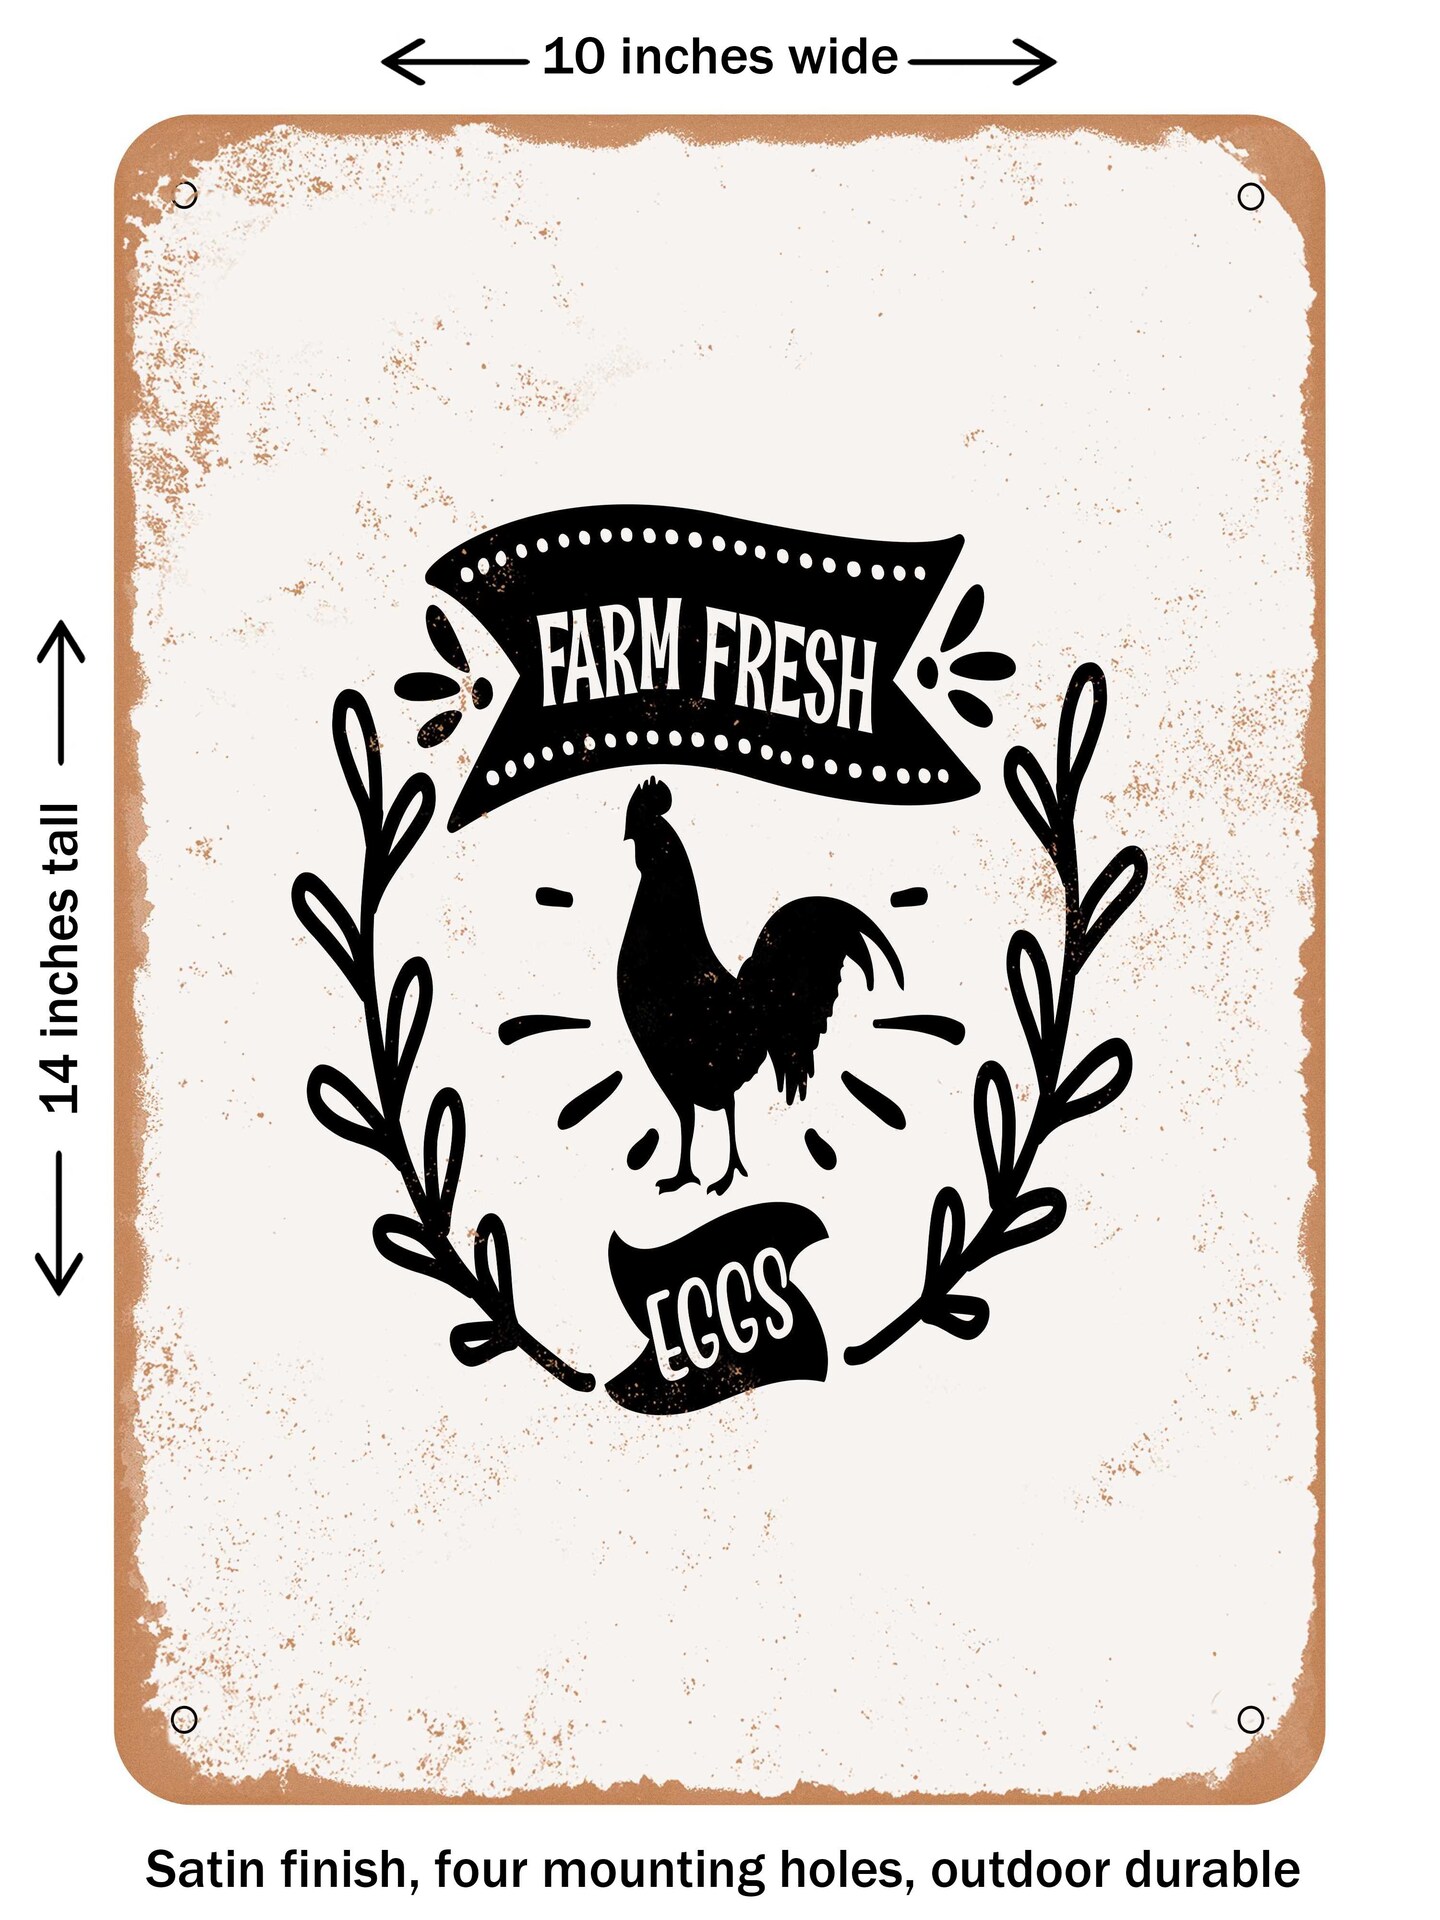 DECORATIVE METAL SIGN - Farm Fresh Eggs - 3  - Vintage Rusty Look